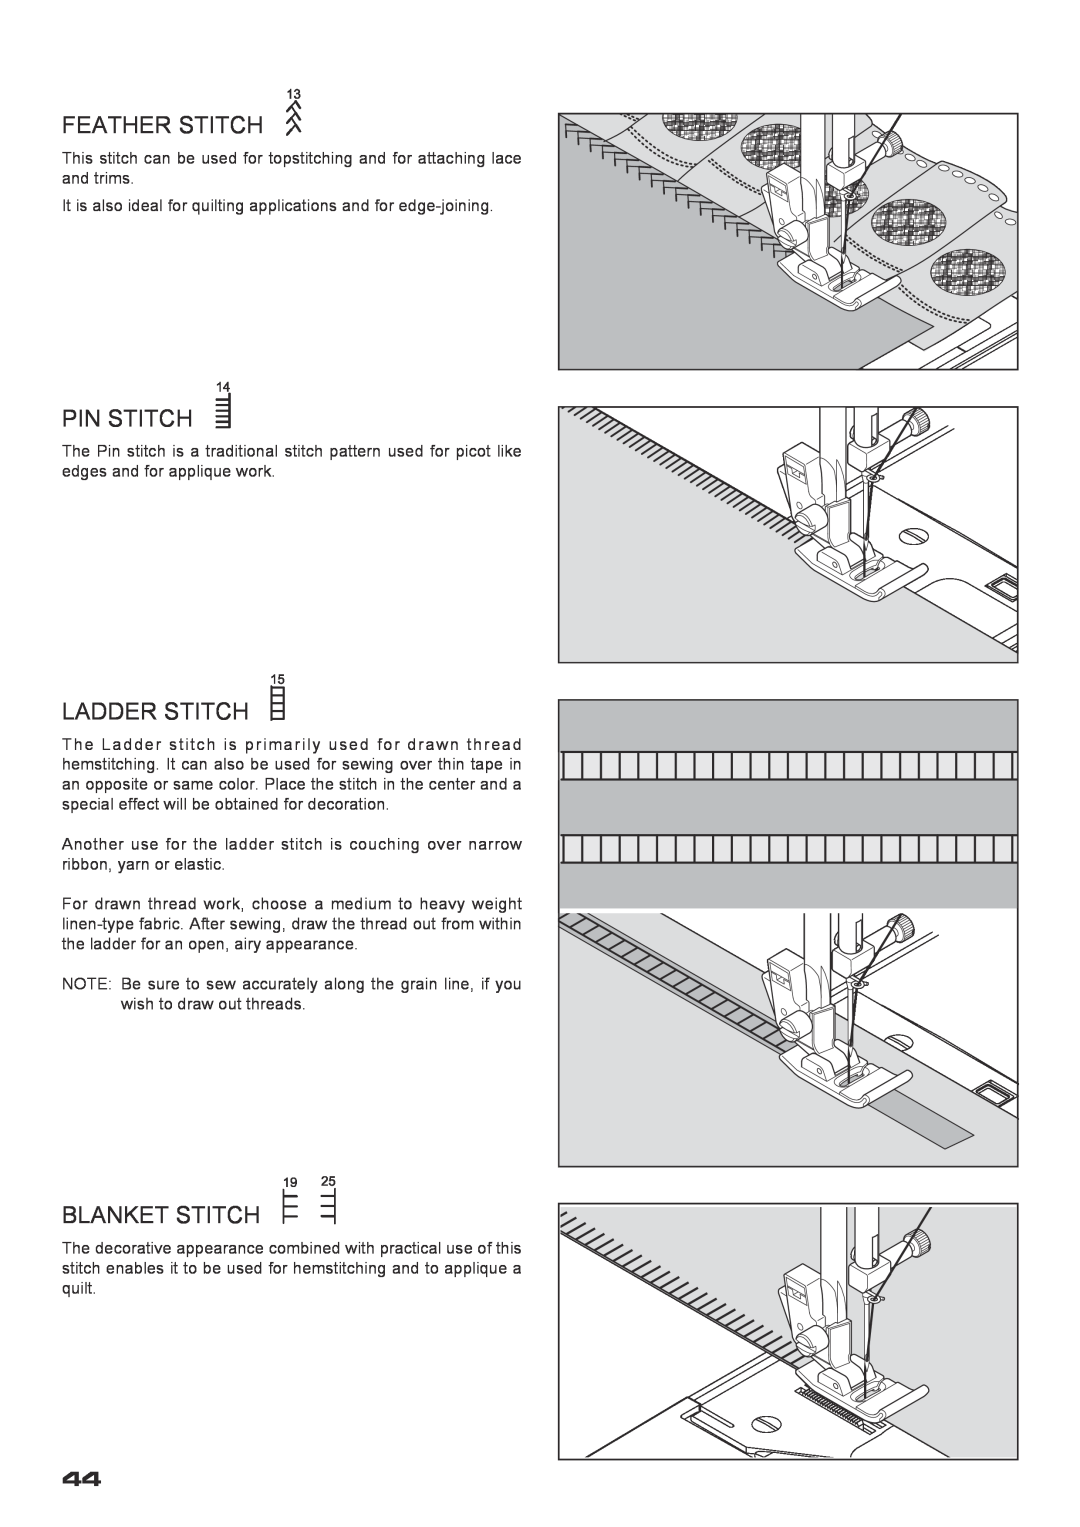 Singer XL-400 instruction manual Feather Stitch, Pin Stitch, Ladder Stitch, Blanket Stitch 